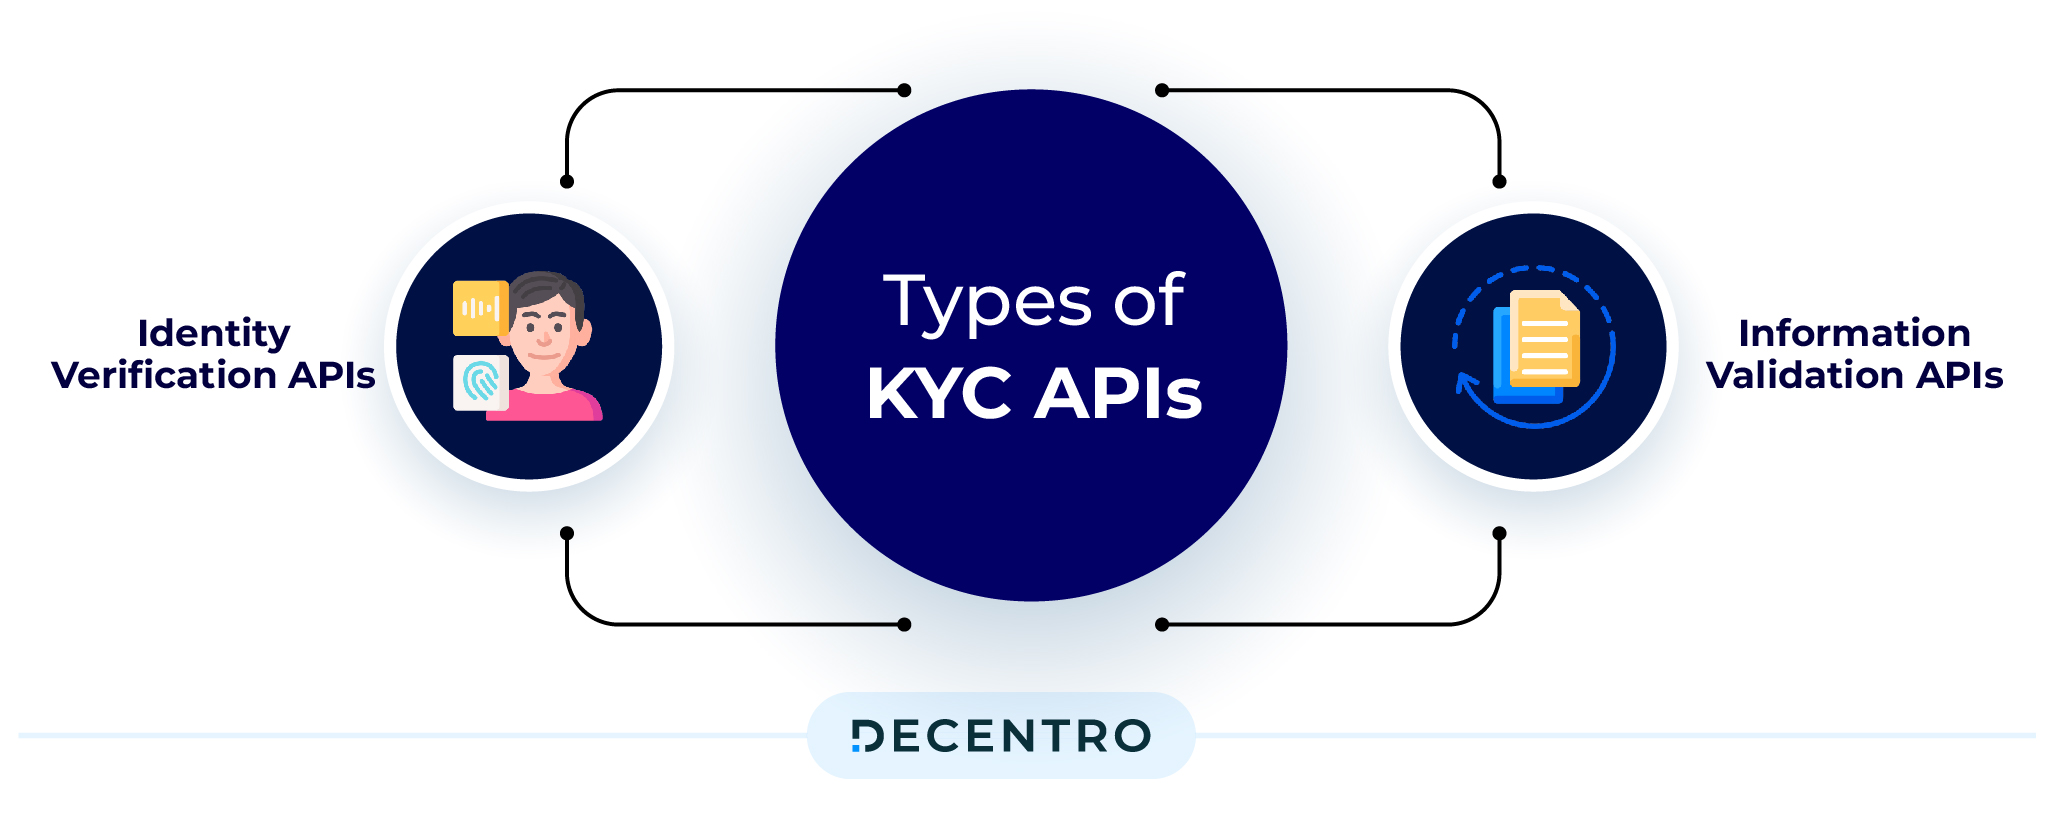 Types of KYC APIs